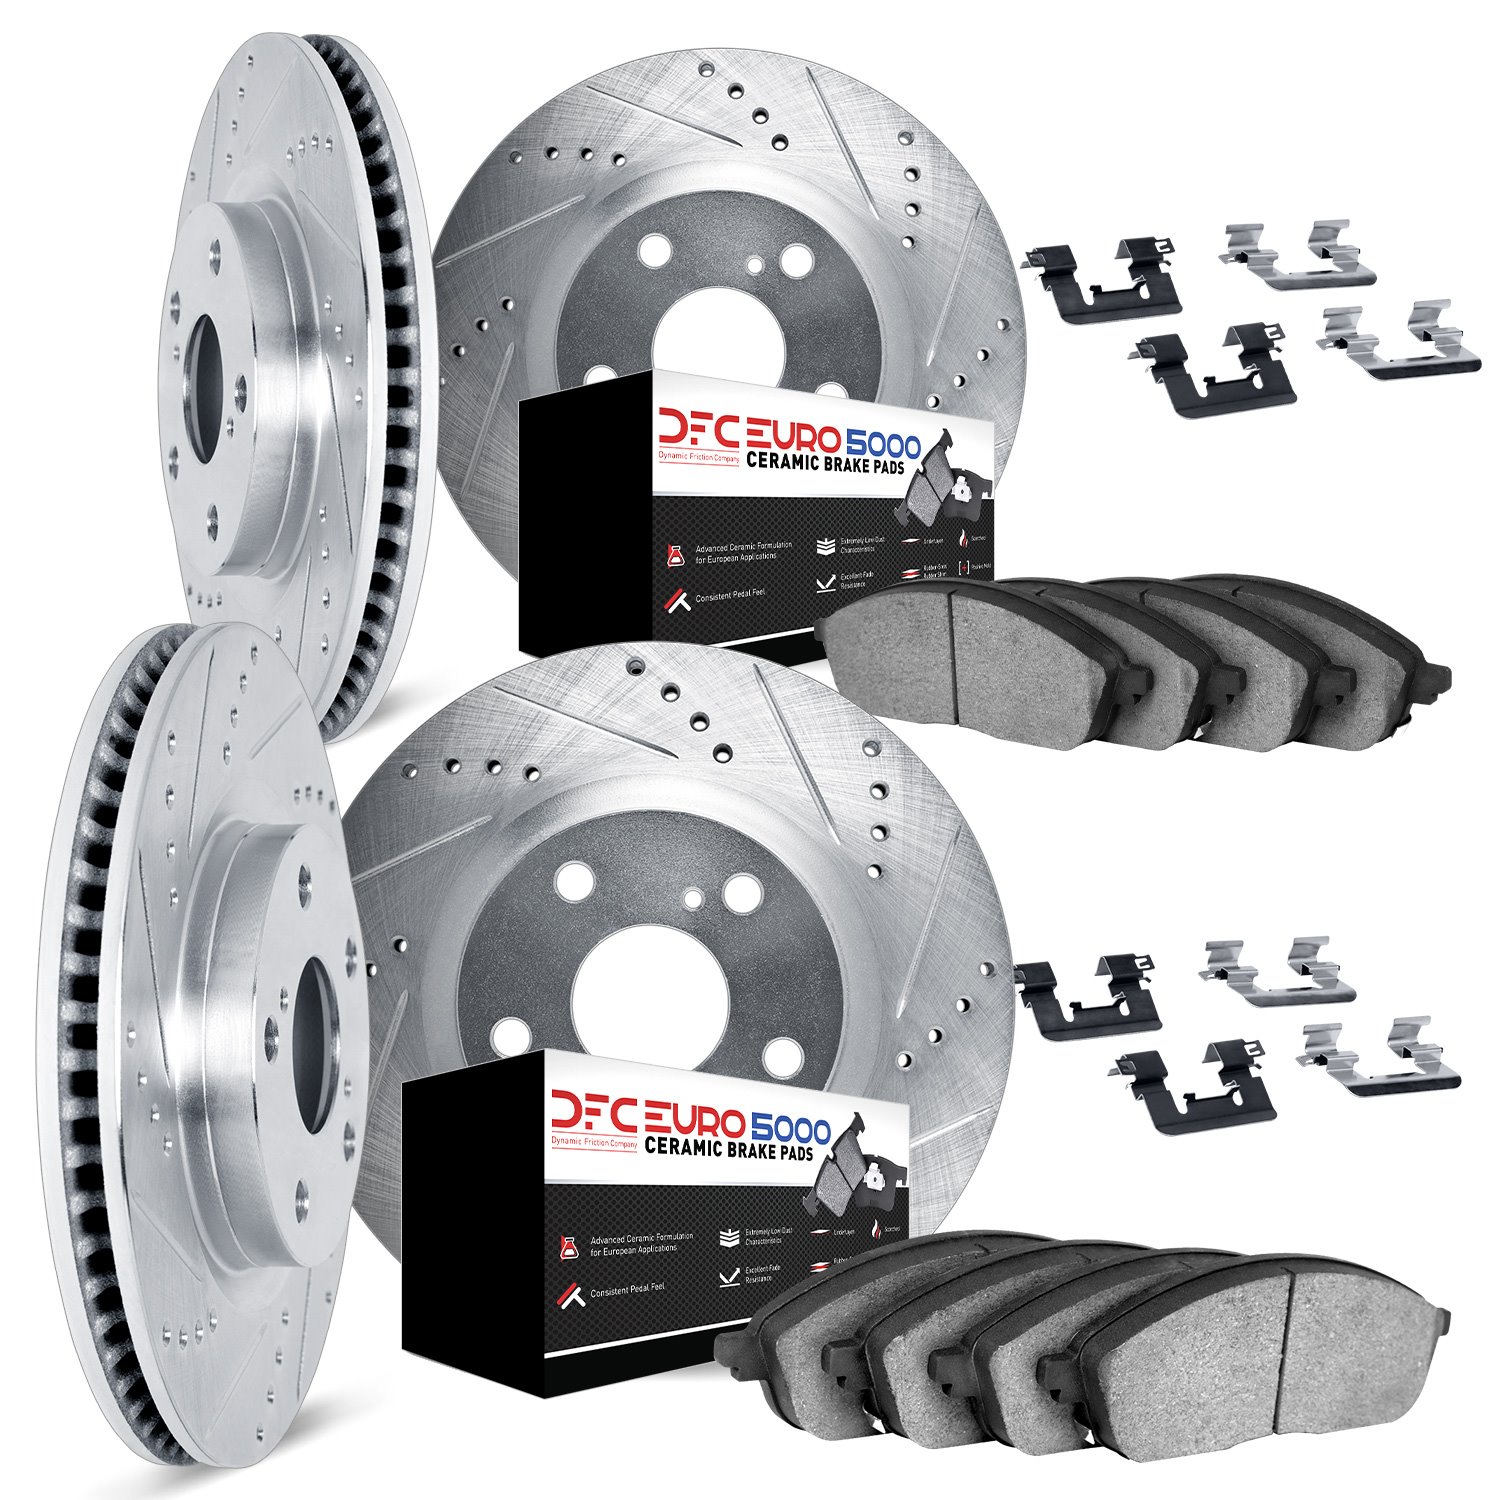 7614-02003 Drilled/Slotted Brake Rotors w/5000 Euro Ceramic Brake Pads Kit & Hardware [Silver], 1997-2004 Porsche, Position: Fro